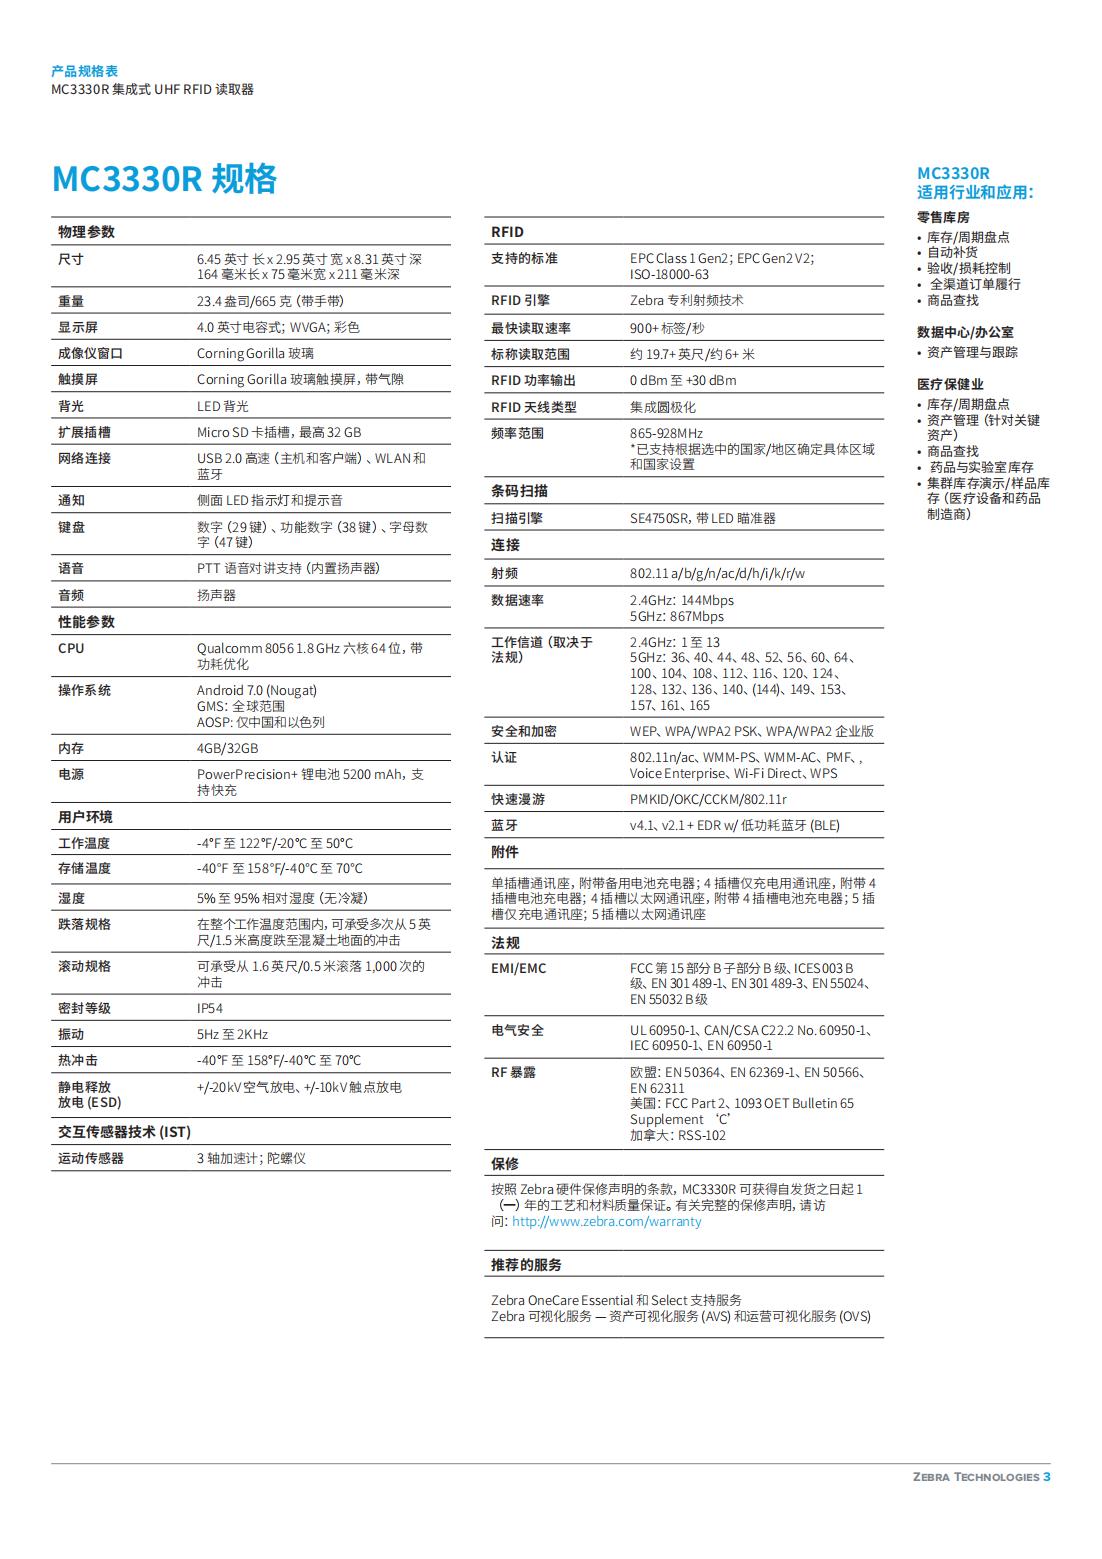 mc3330r-spec-sheet-zh-cn_02.jpg